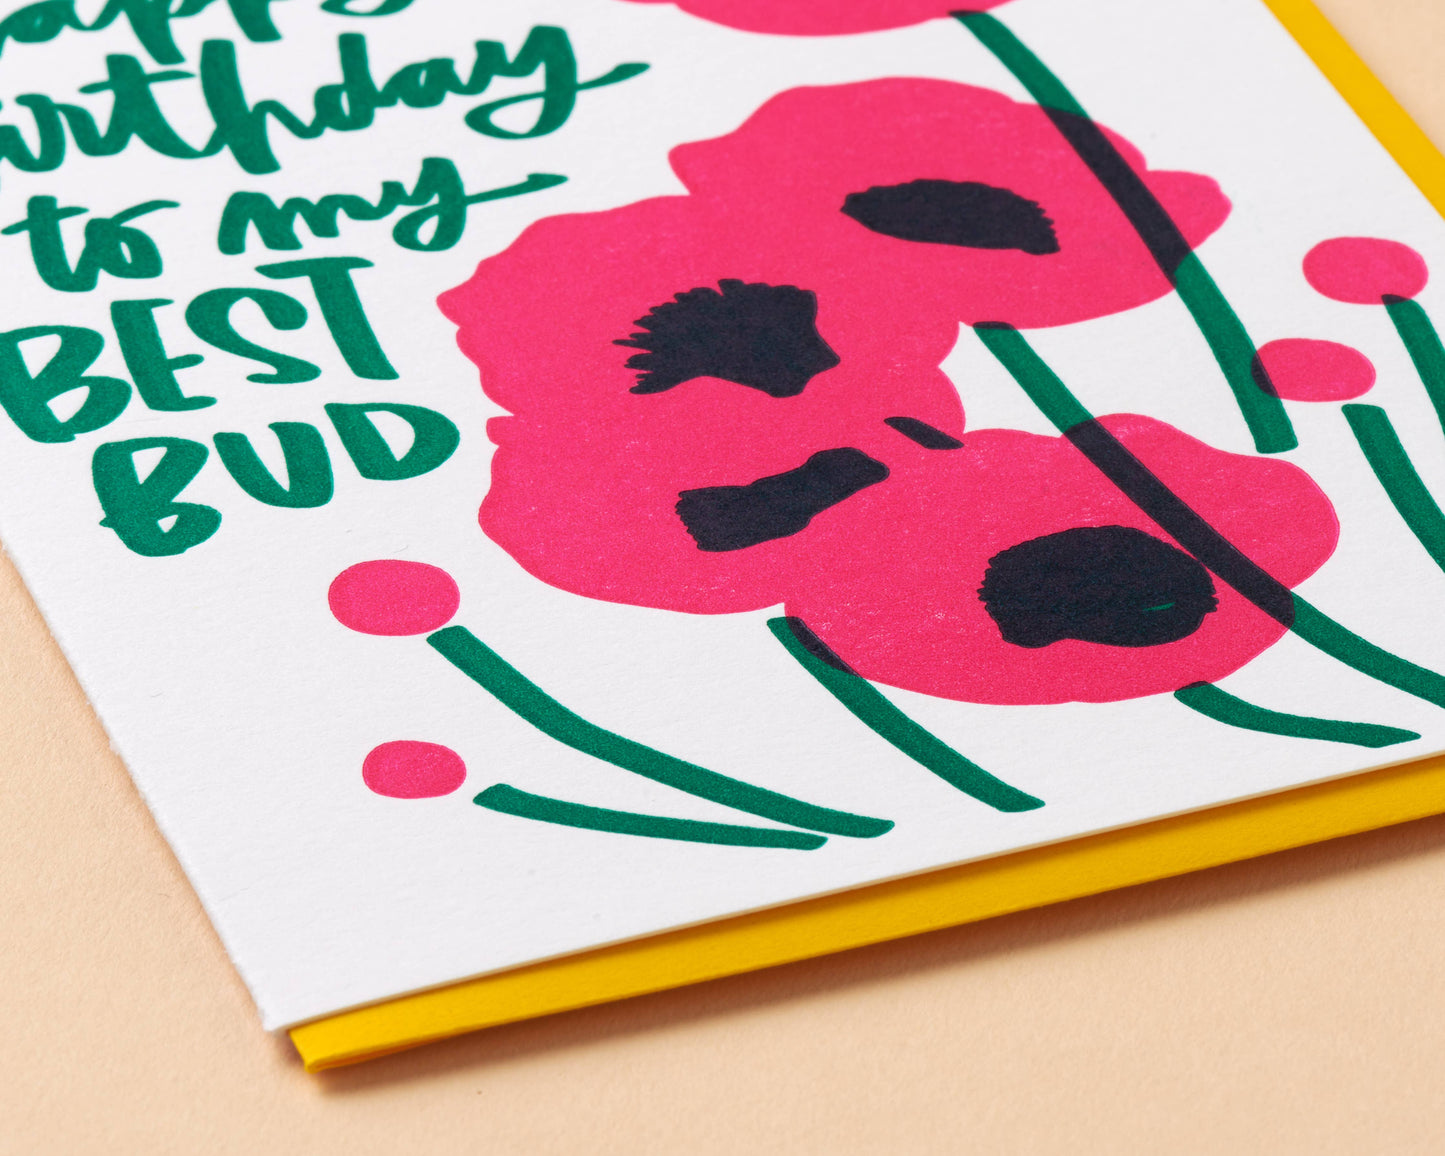 Best Bud Flowers Birthday Letterpress Greeting Card